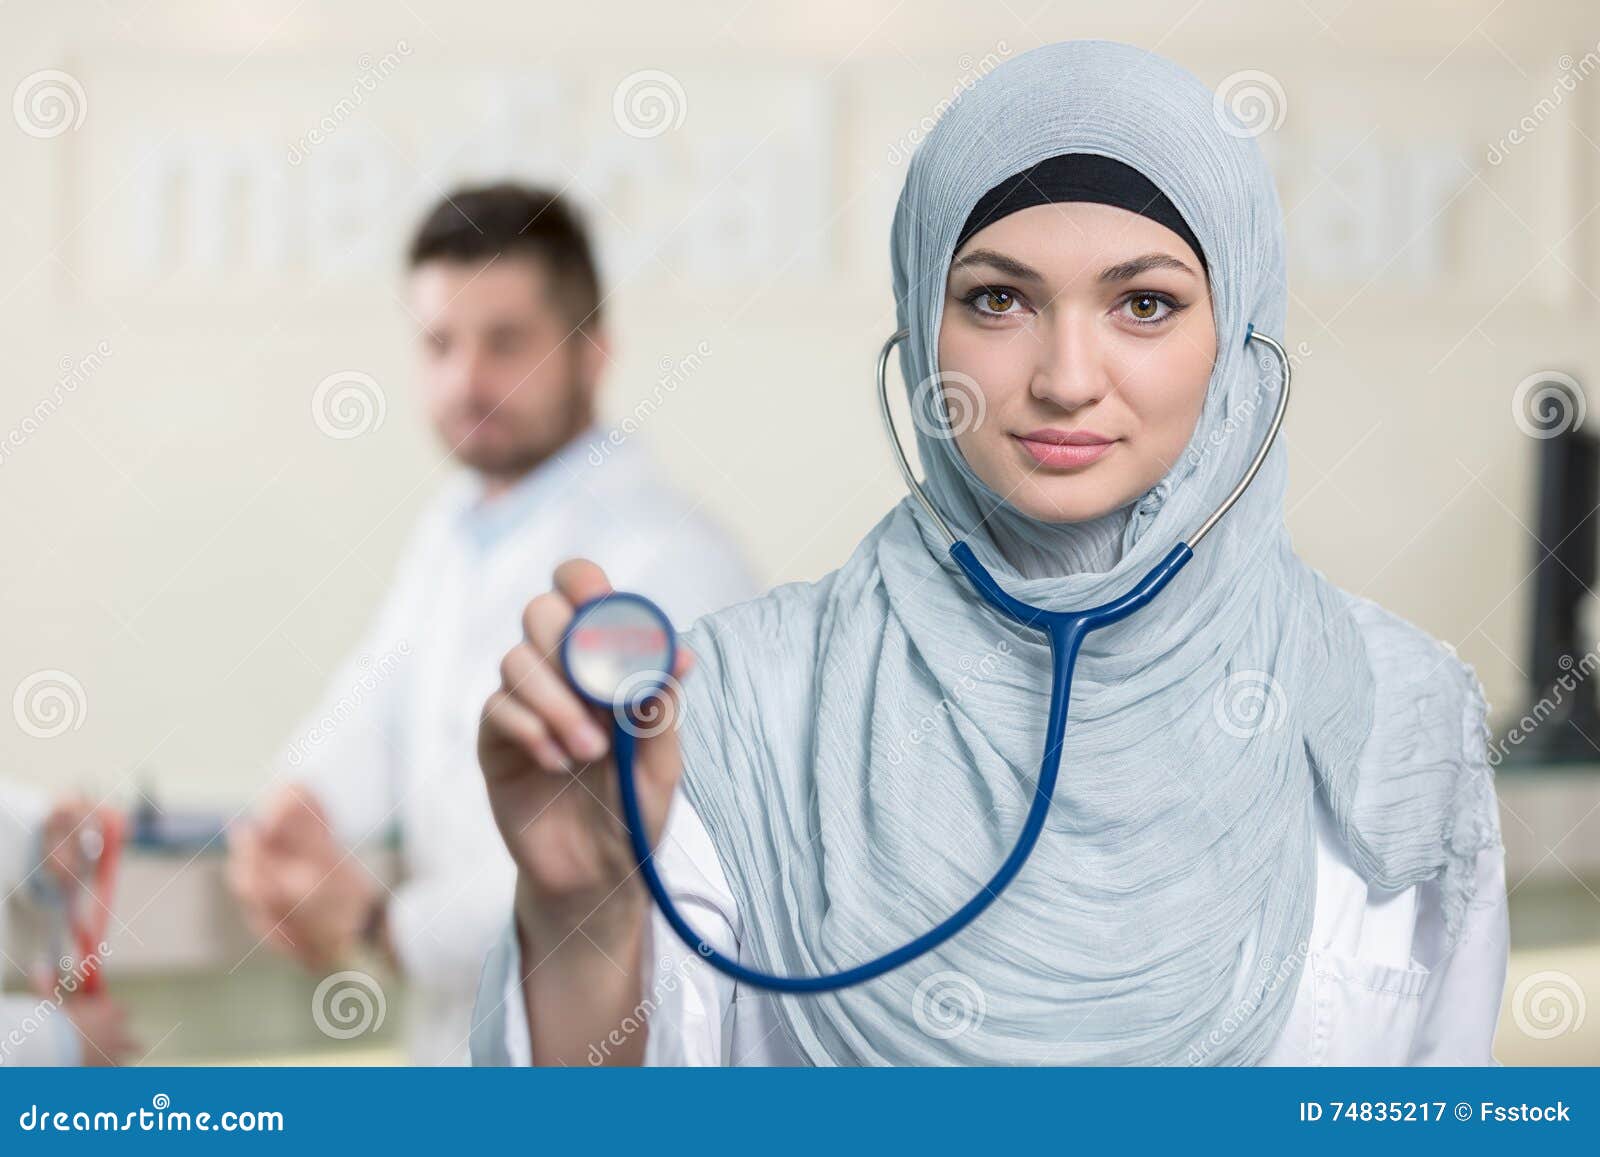 Врачи мусульмане. Мусульманки в медицине. Мусульманка врач. Арабский доктор женщина. Медики с платком.